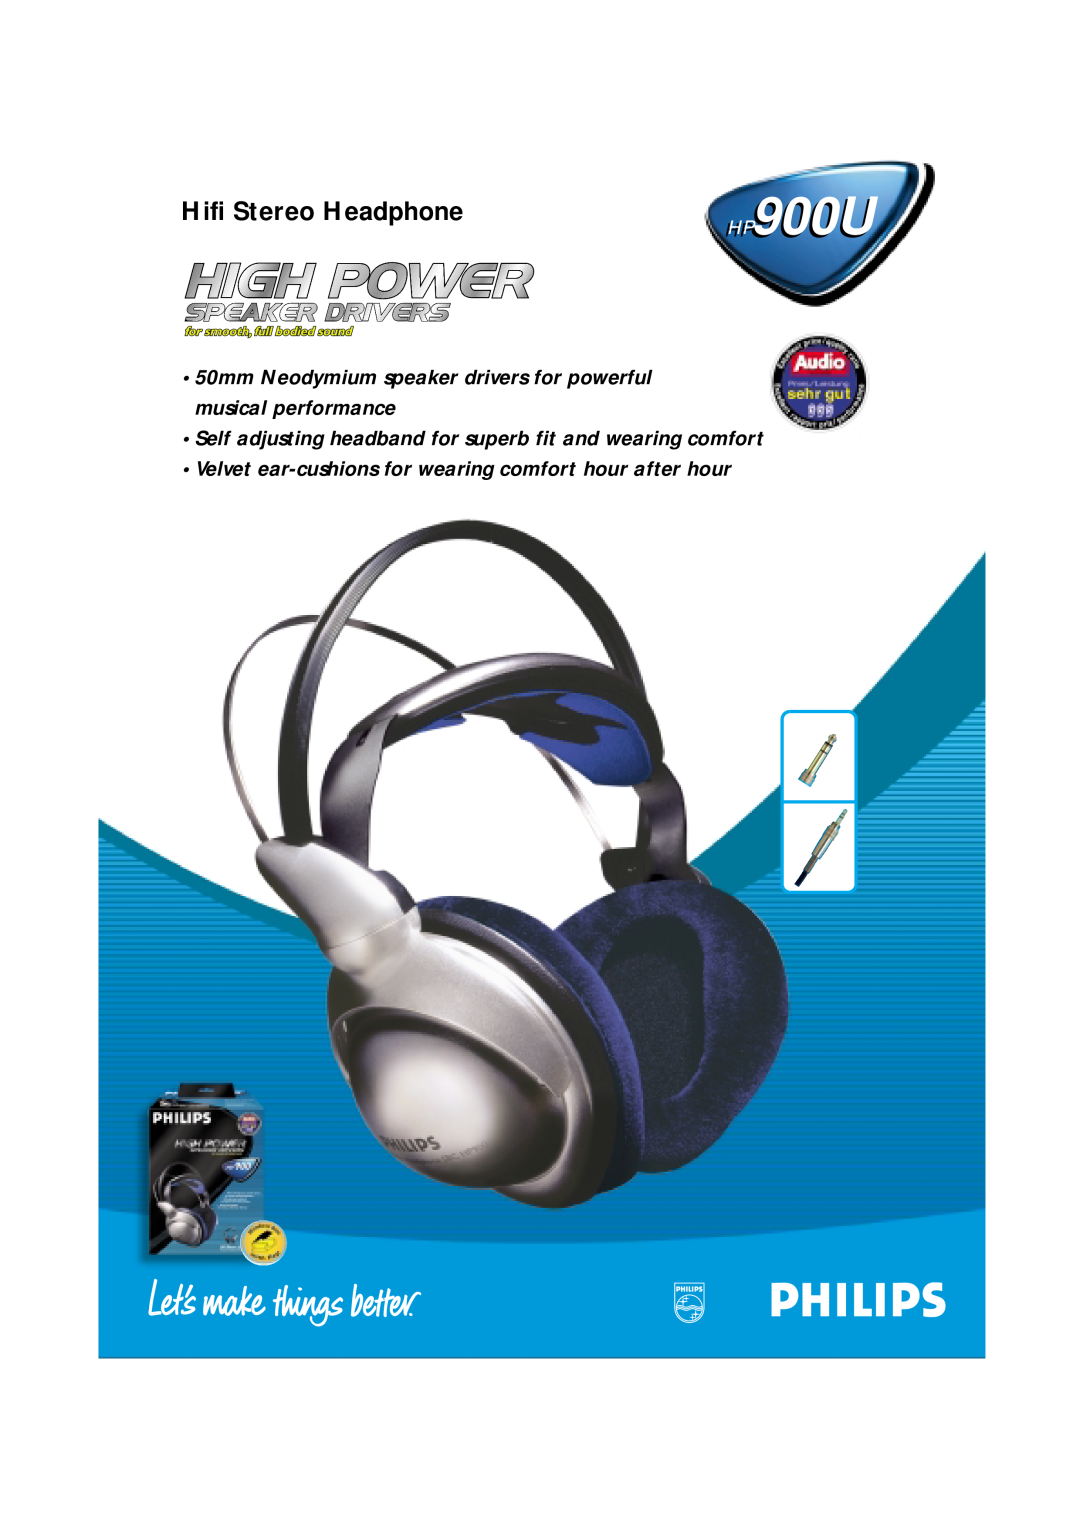 Philips HP900U manual Hifi Stereo Headphone 